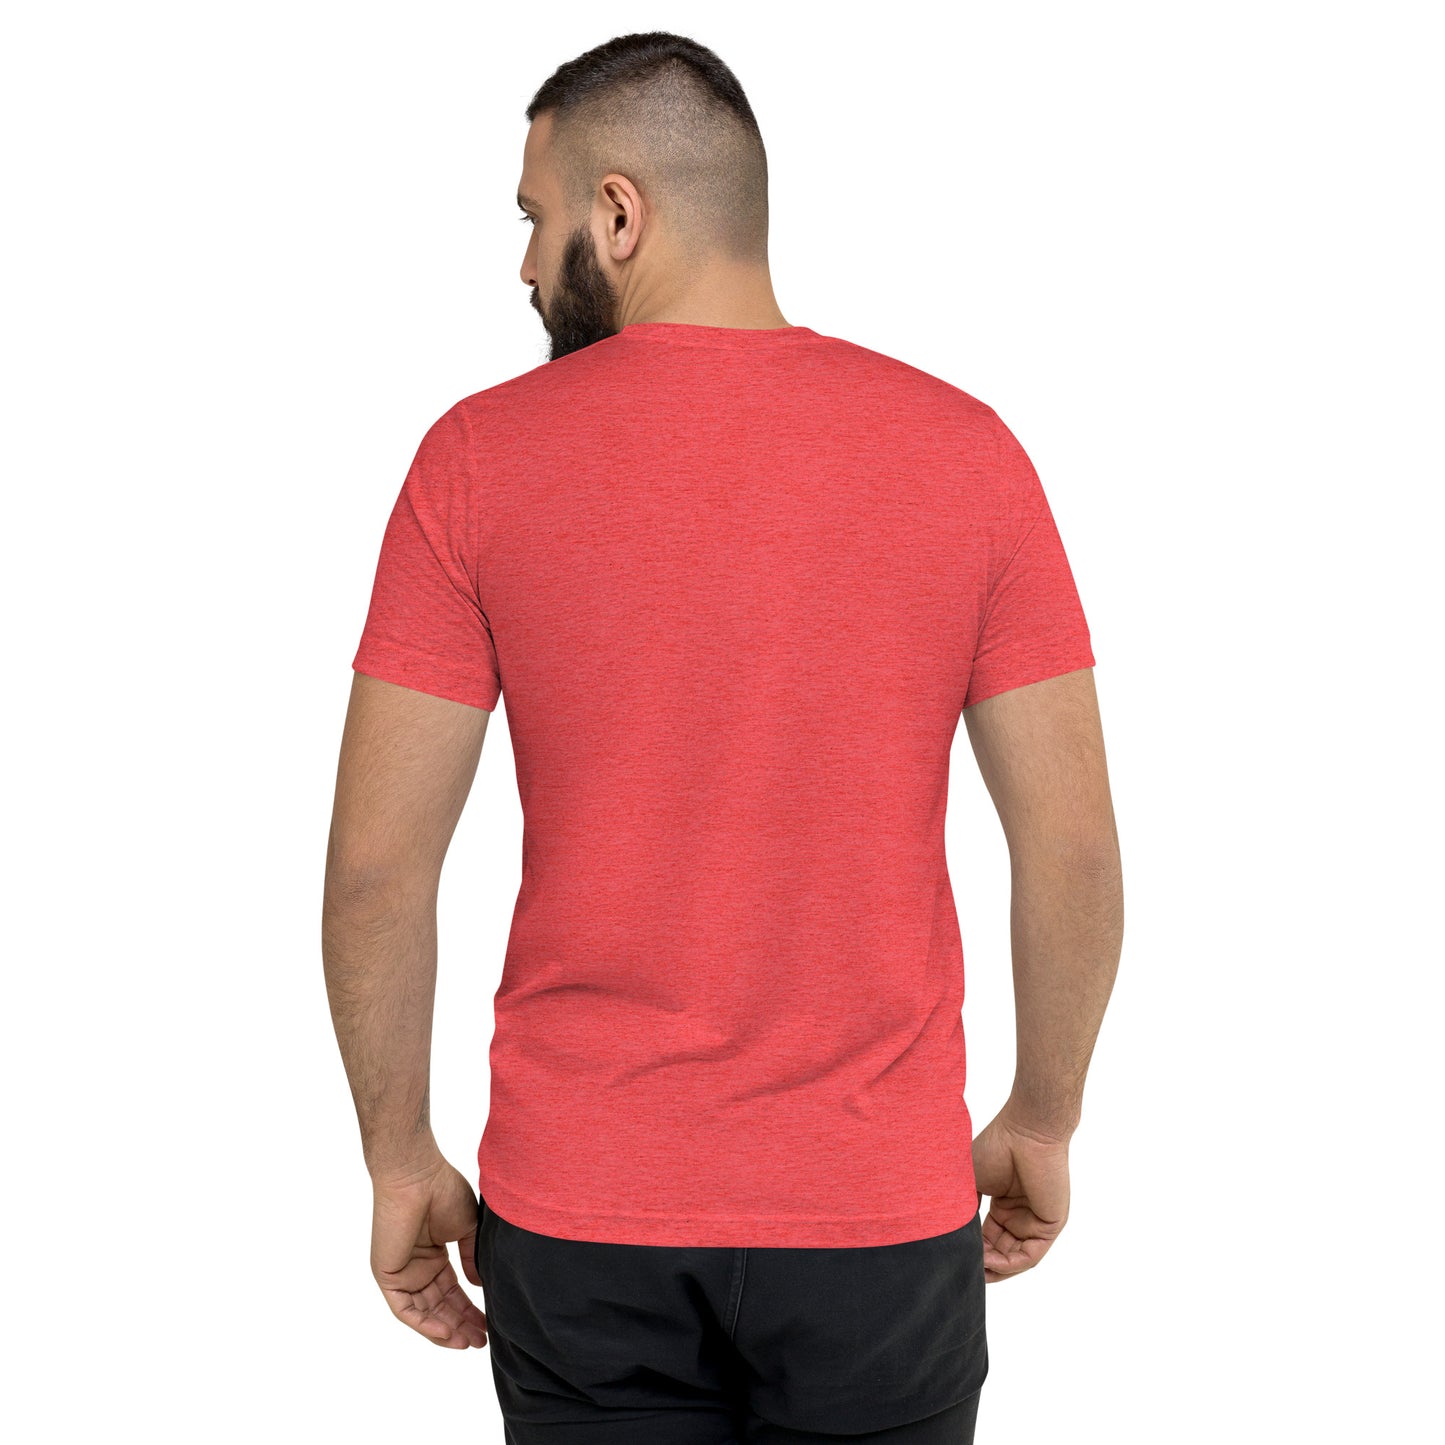 NE New England Short Sleeve Tri-Blend T-Shirt